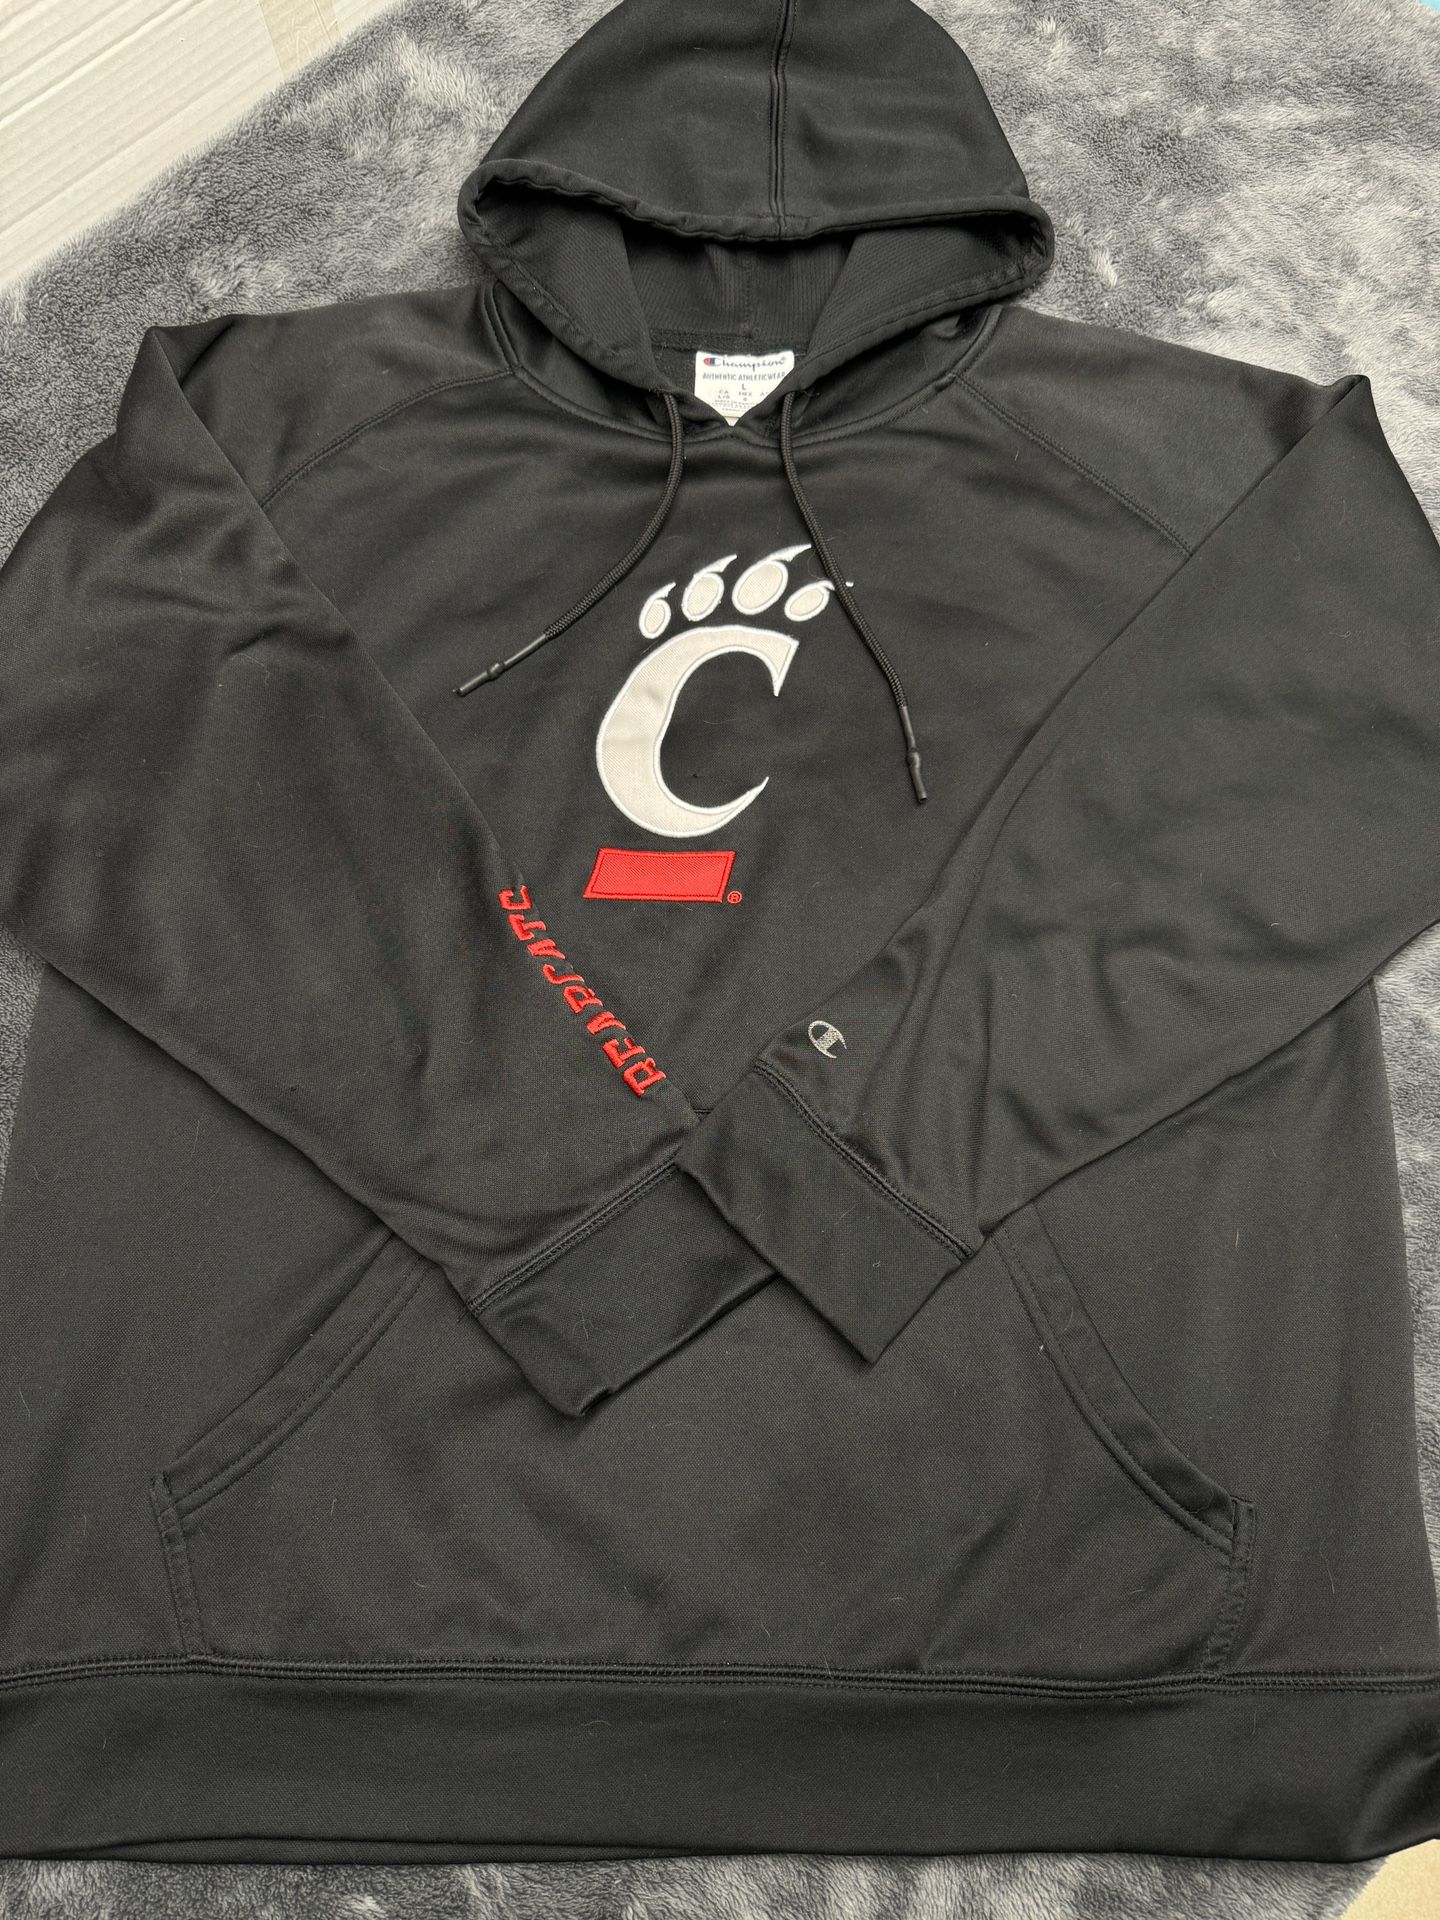 University Of Cincinnati Bearcats Dri Fit Men’s Large Hoodie in good shaoe!  